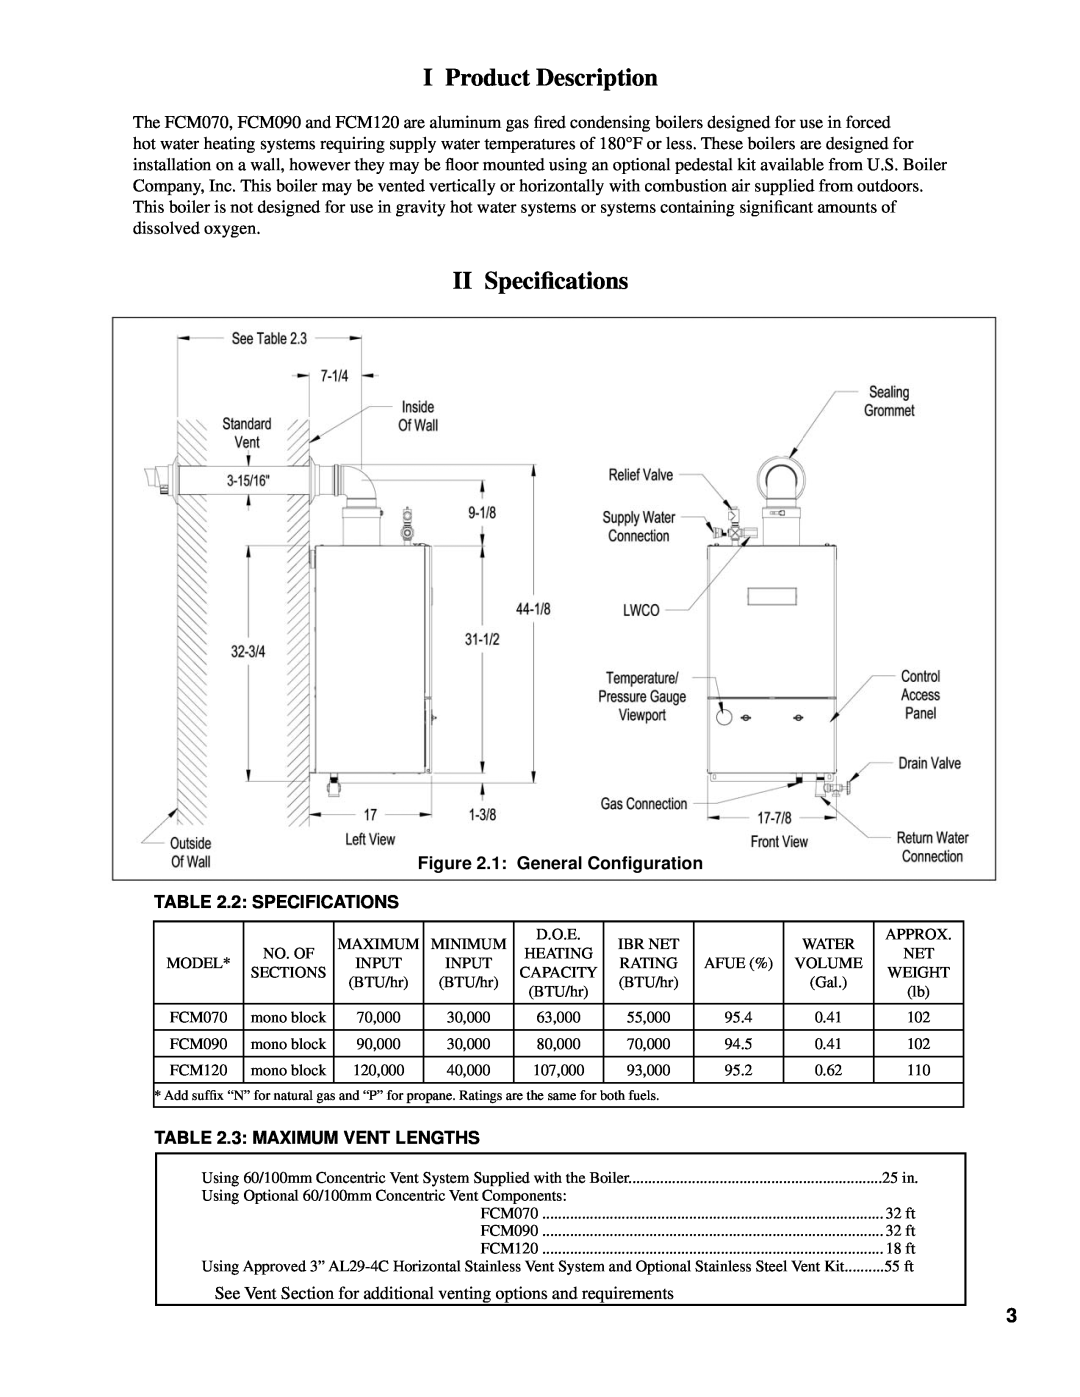 Burnham 101008-01R1-2/07 manual I Product Description, II Speciﬁcations, 1 General Conﬁguration, 2 SPECIFICATIONS 